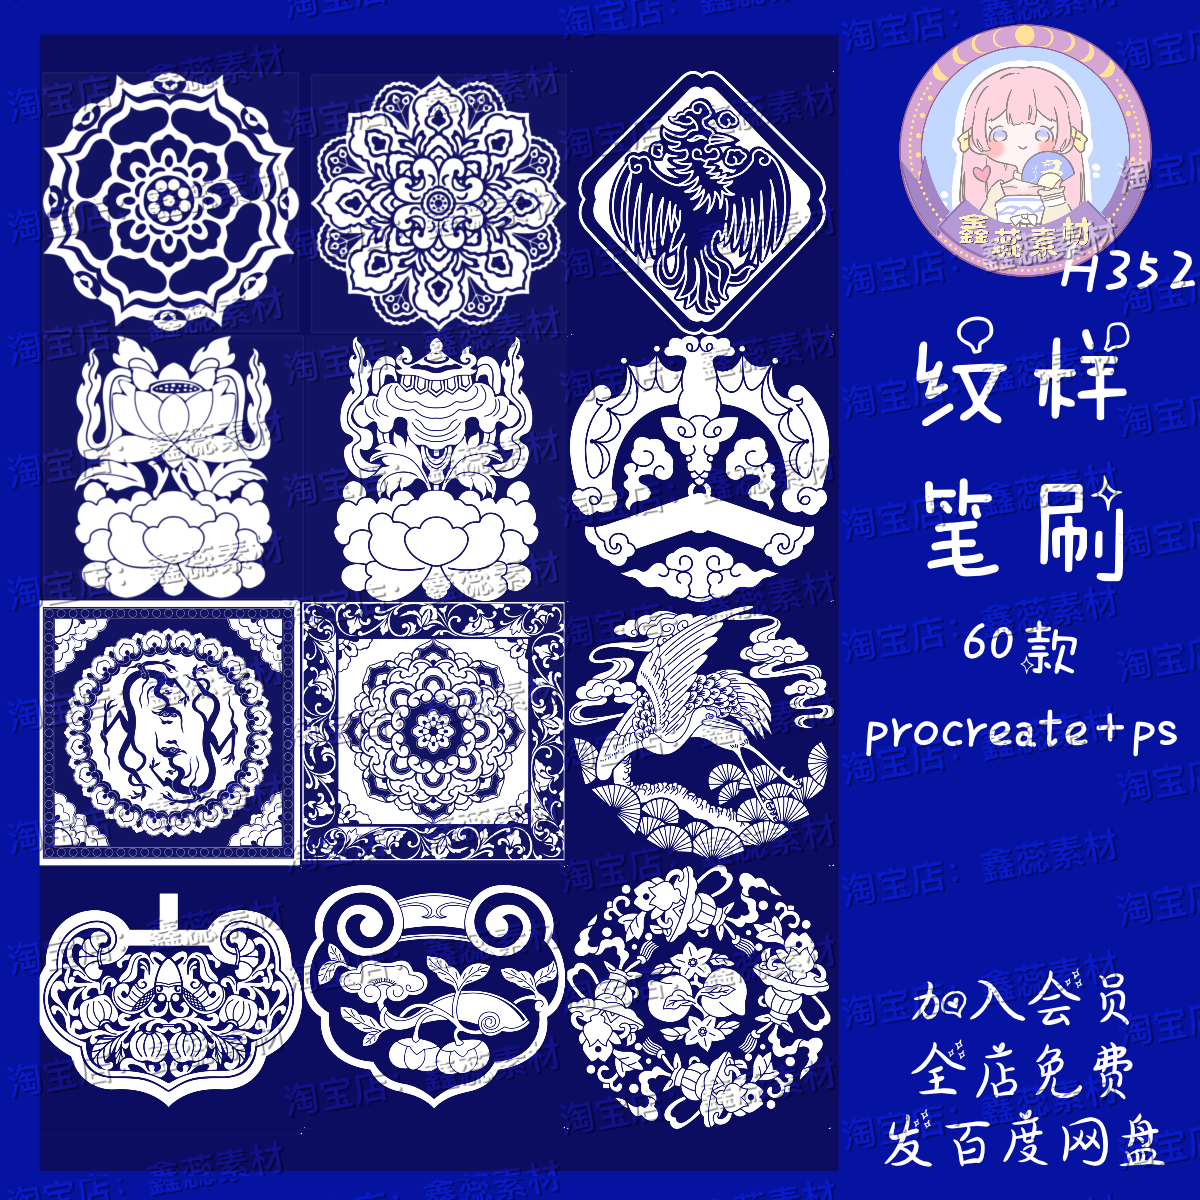 procreate笔刷ps笔刷中国传统吉祥纹样民族风国风绘画点缀笔刷